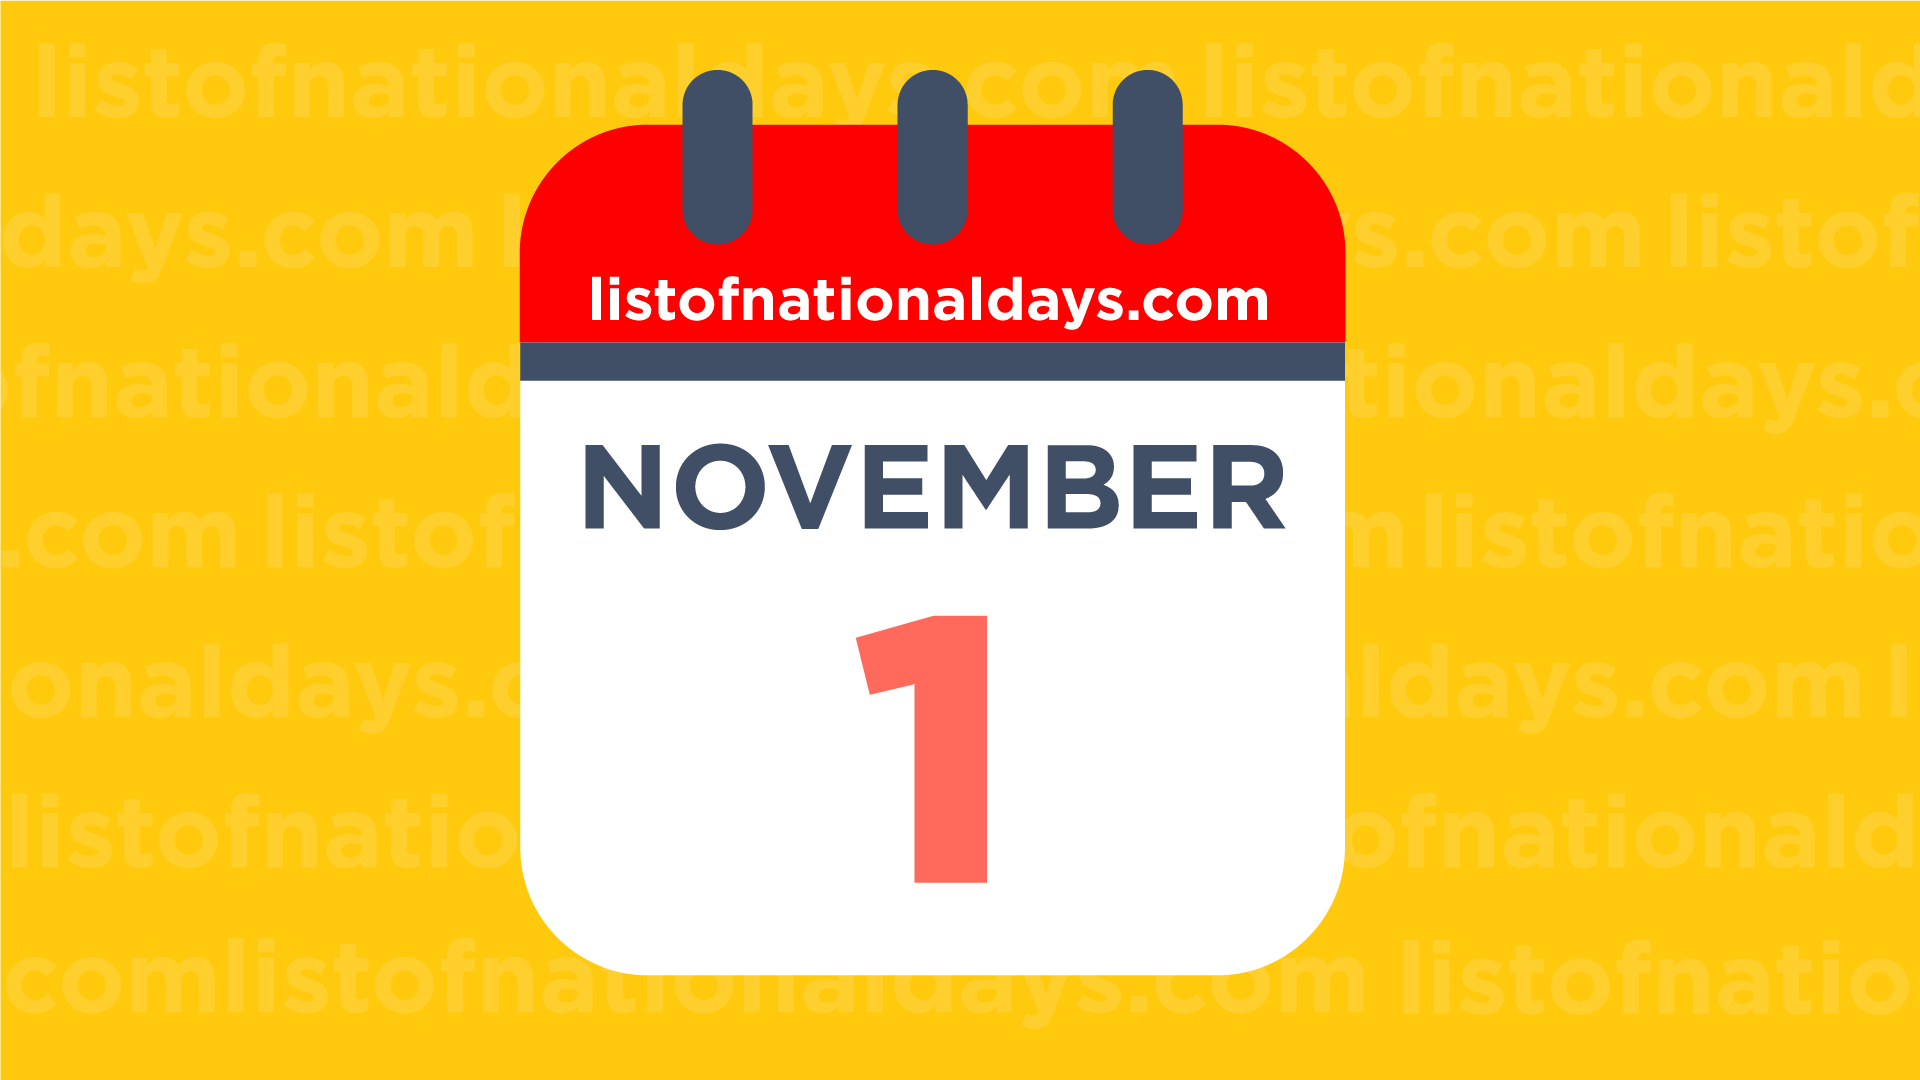 NOVEMBER1 List Of National Days